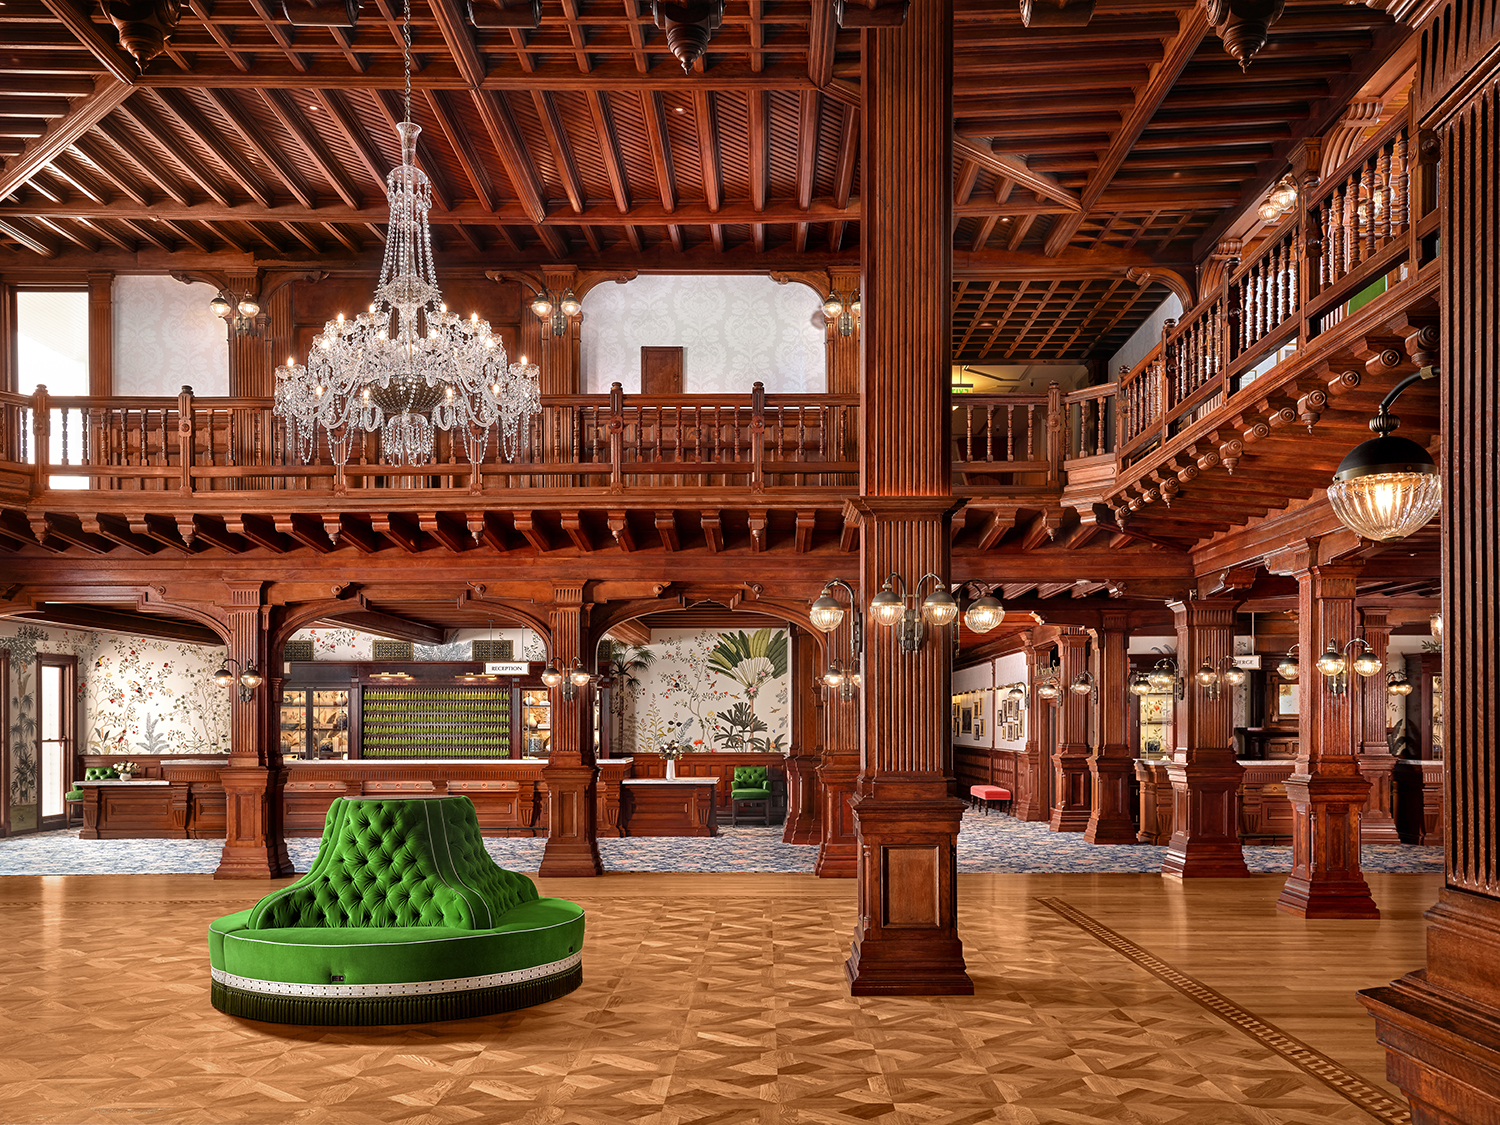 hotel-del-coronado-lobby-restored-2021-wide.jpg